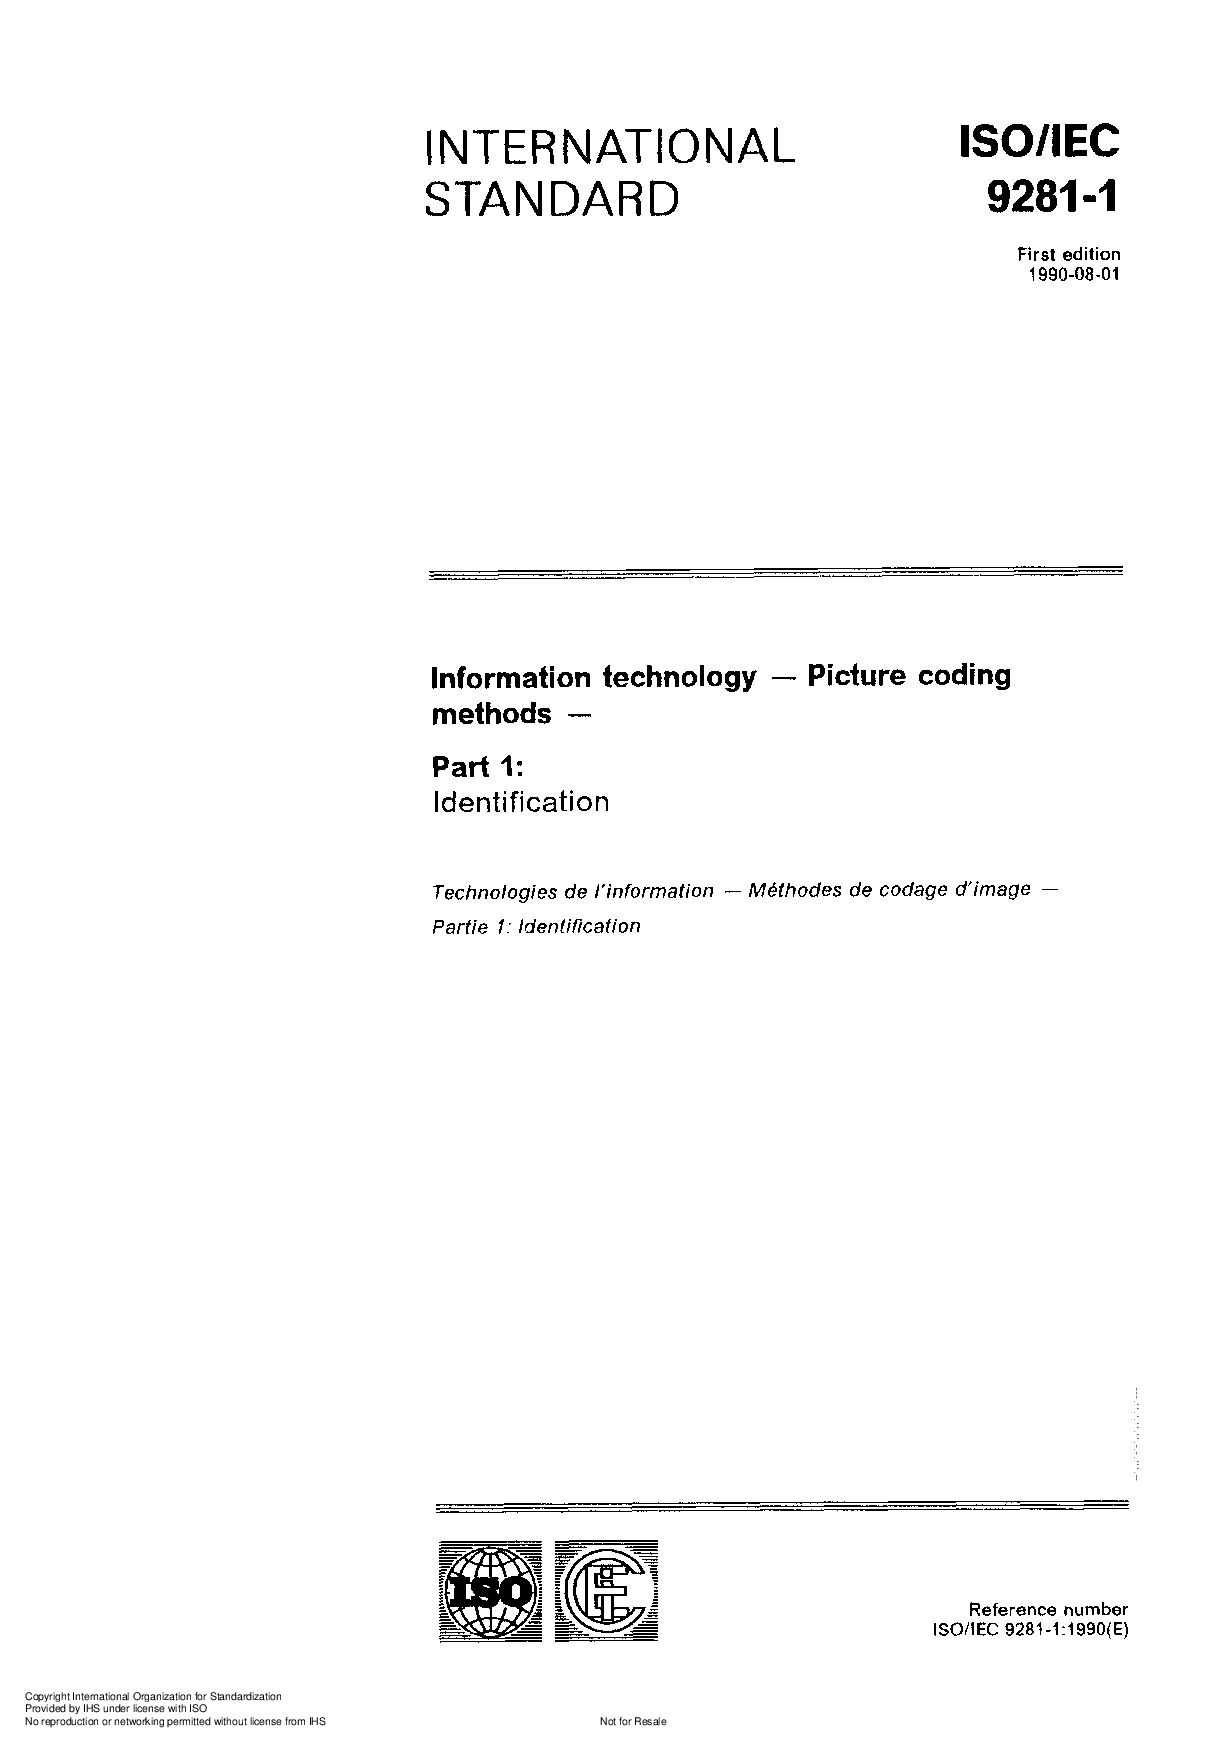 ISO/IEC 9281-1:1990